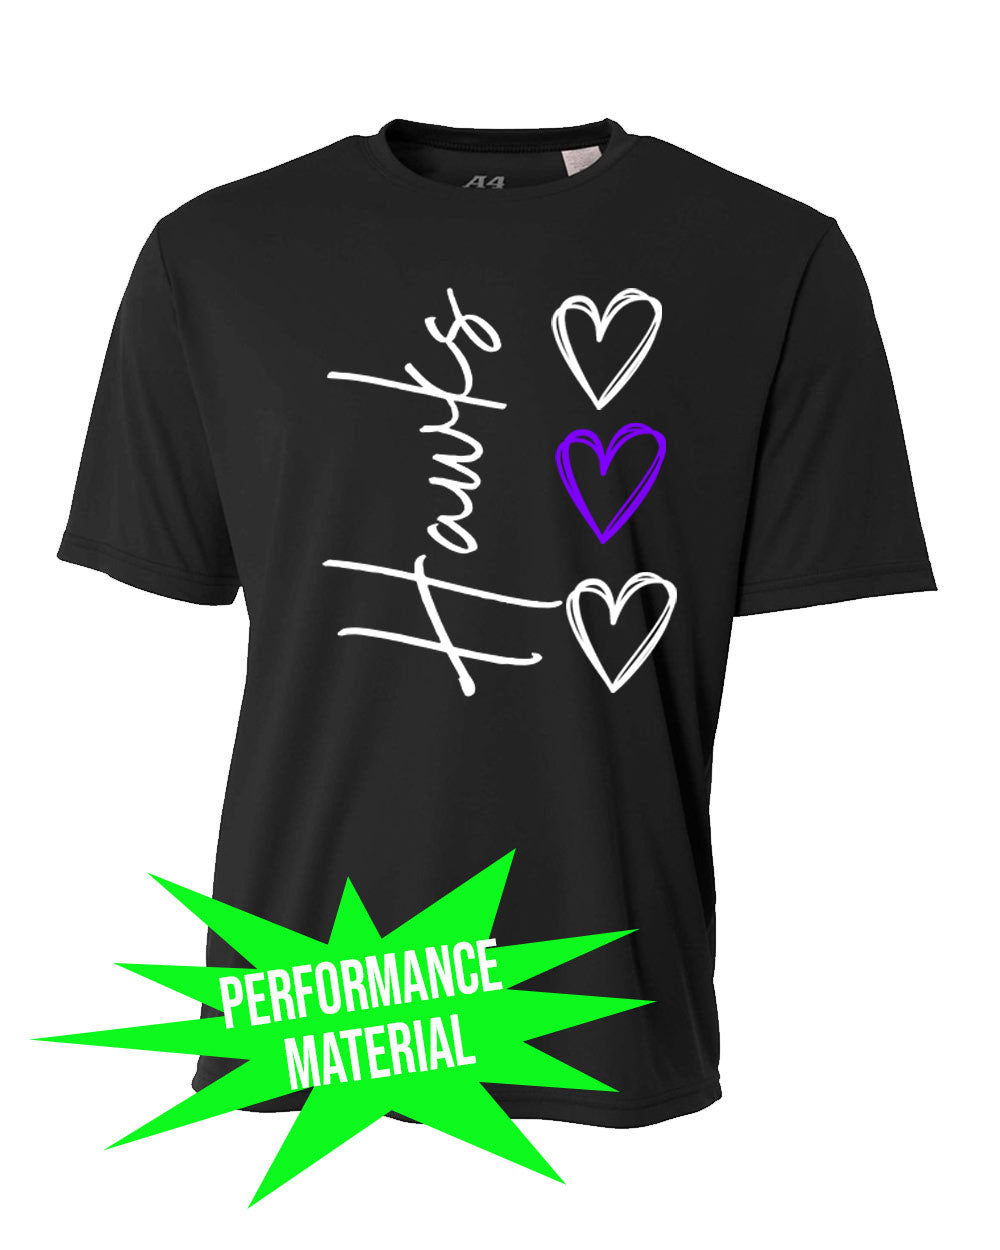 McKeown Performance Material design 16 T-Shirt